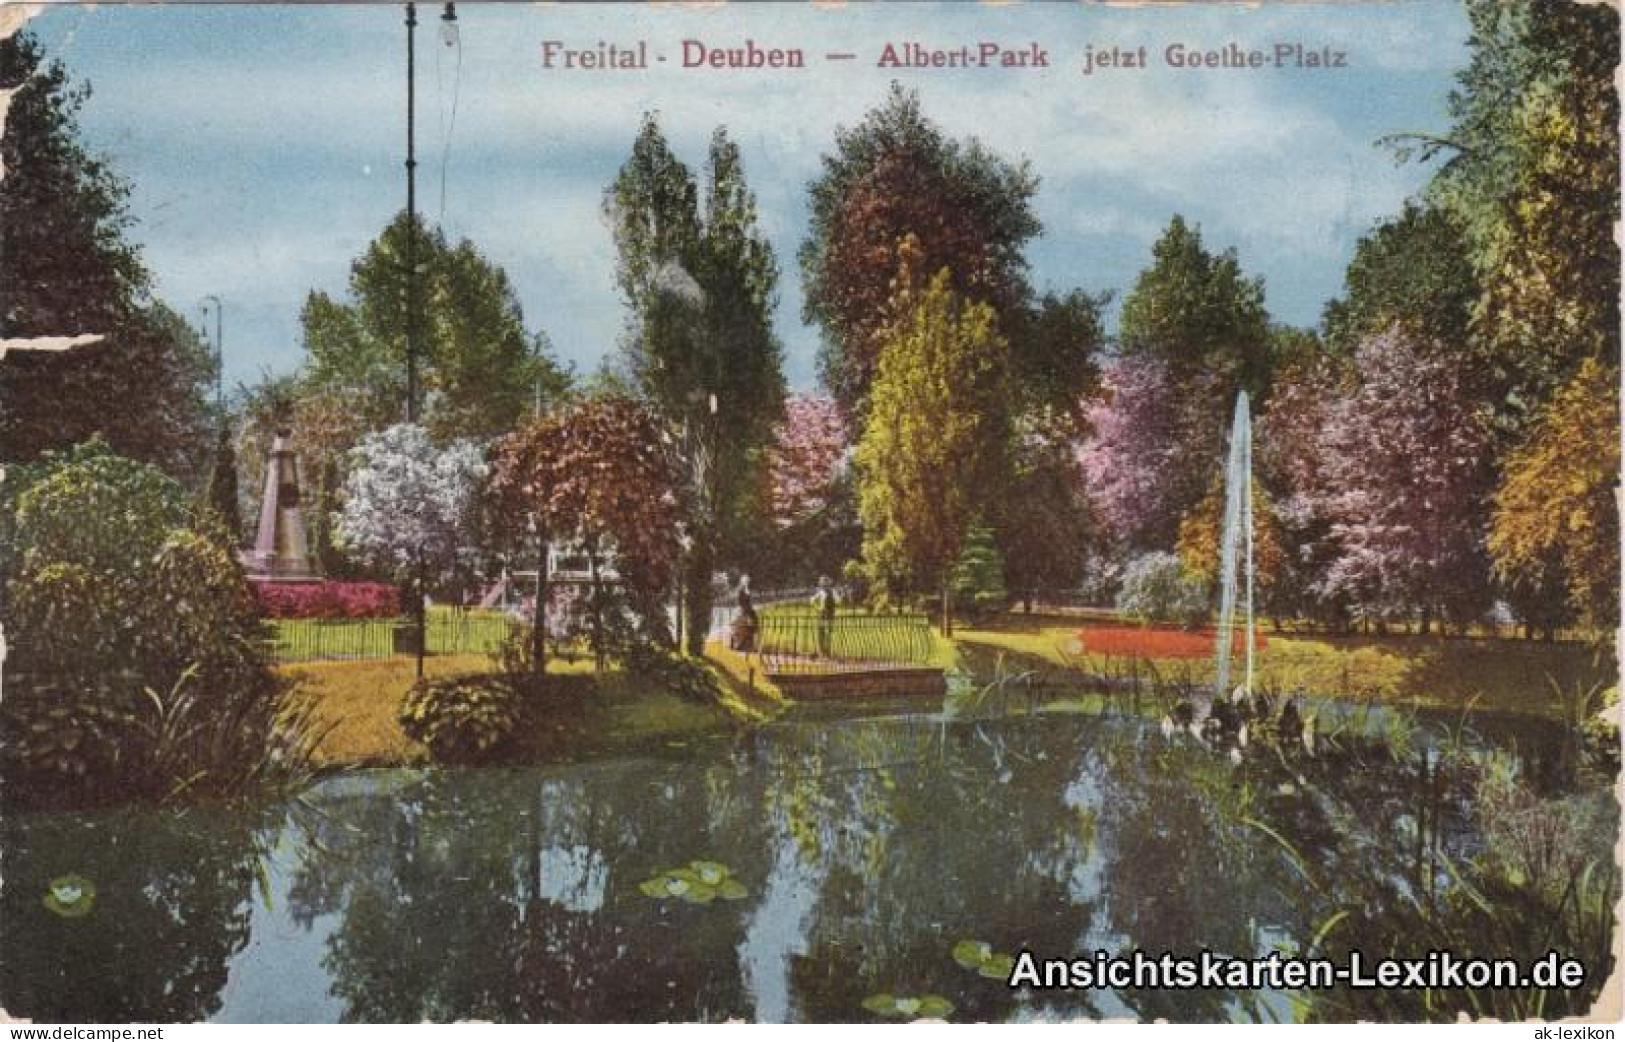 Ansichtskarte Deuben-Freital Albert-Park - Jetzt Goethe-Platz 1928  - Freital